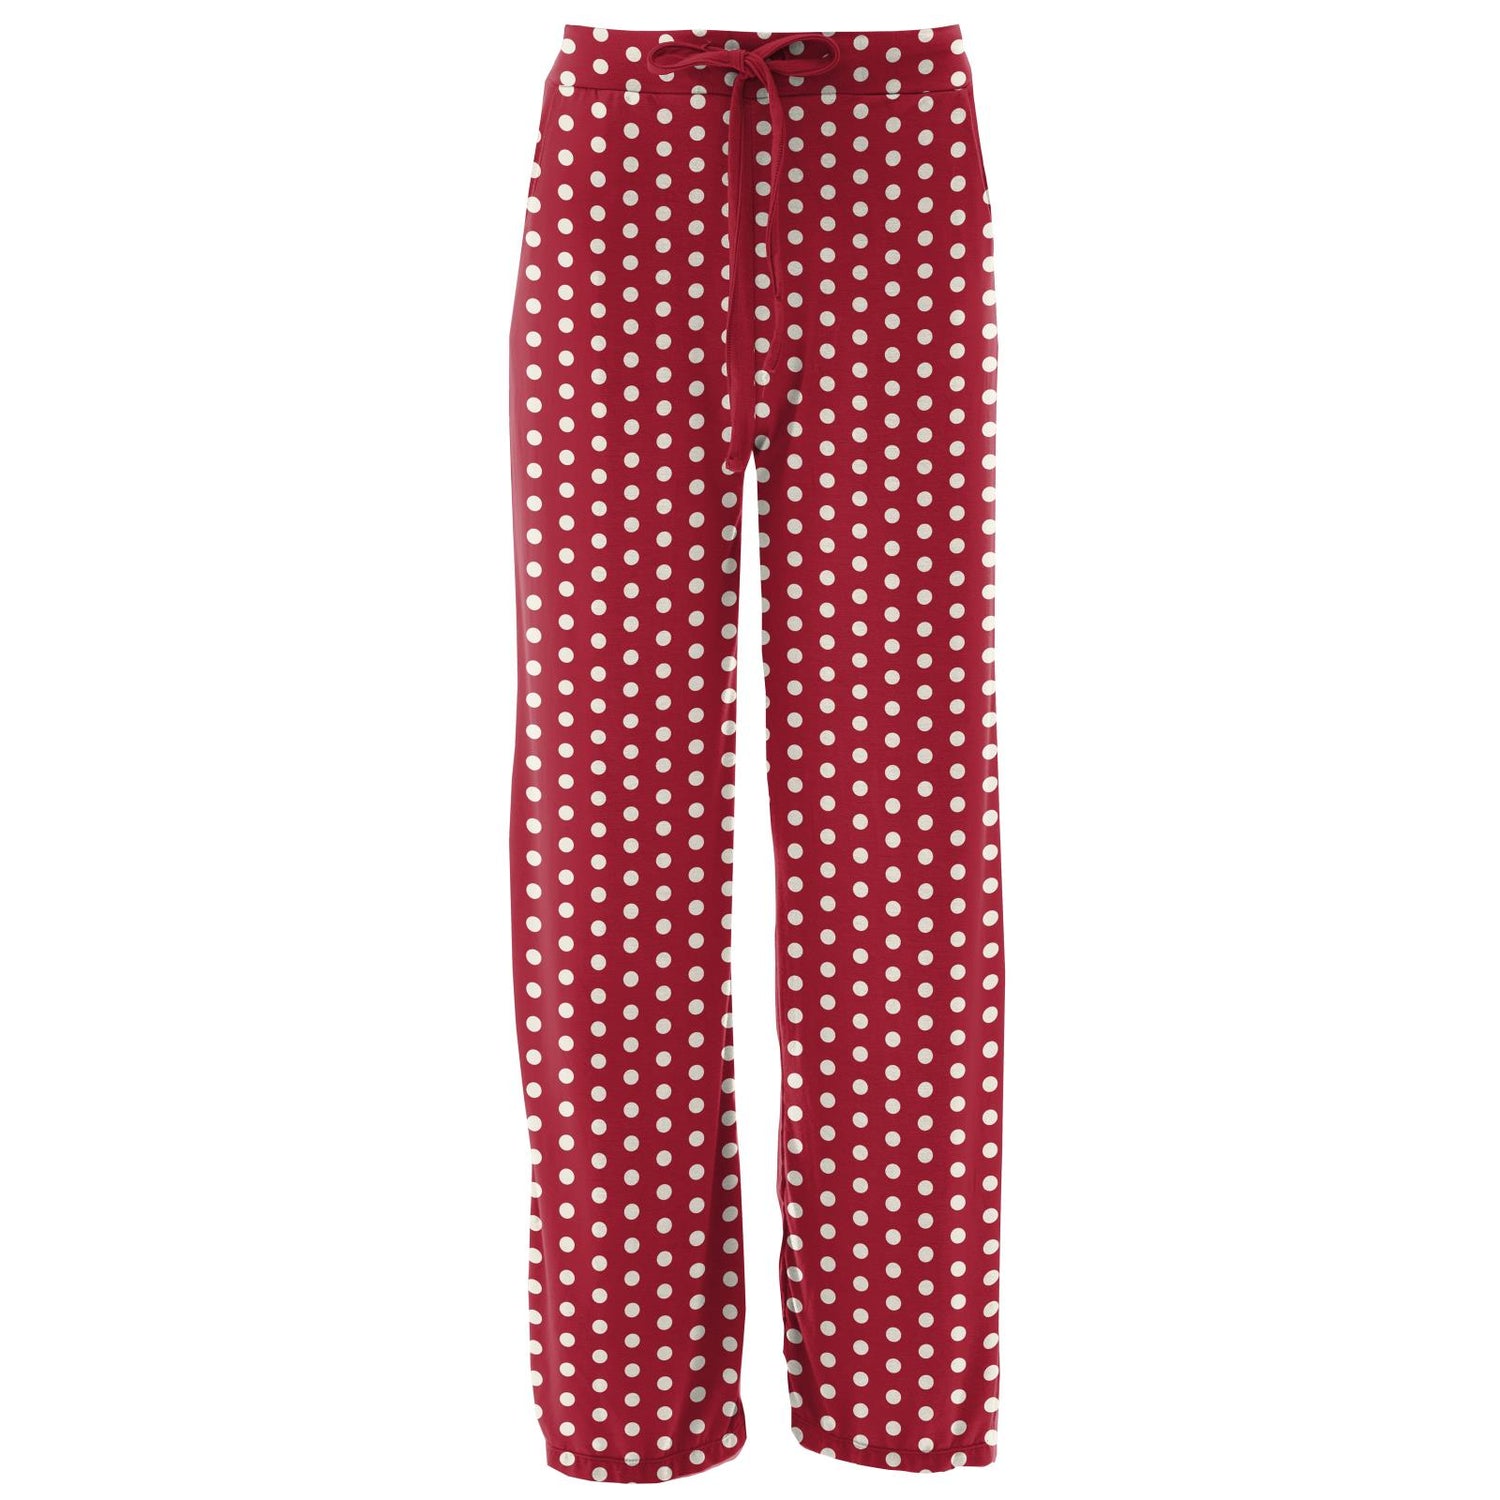 Women's Print Lounge Pants in Candy Apple Polka Dots